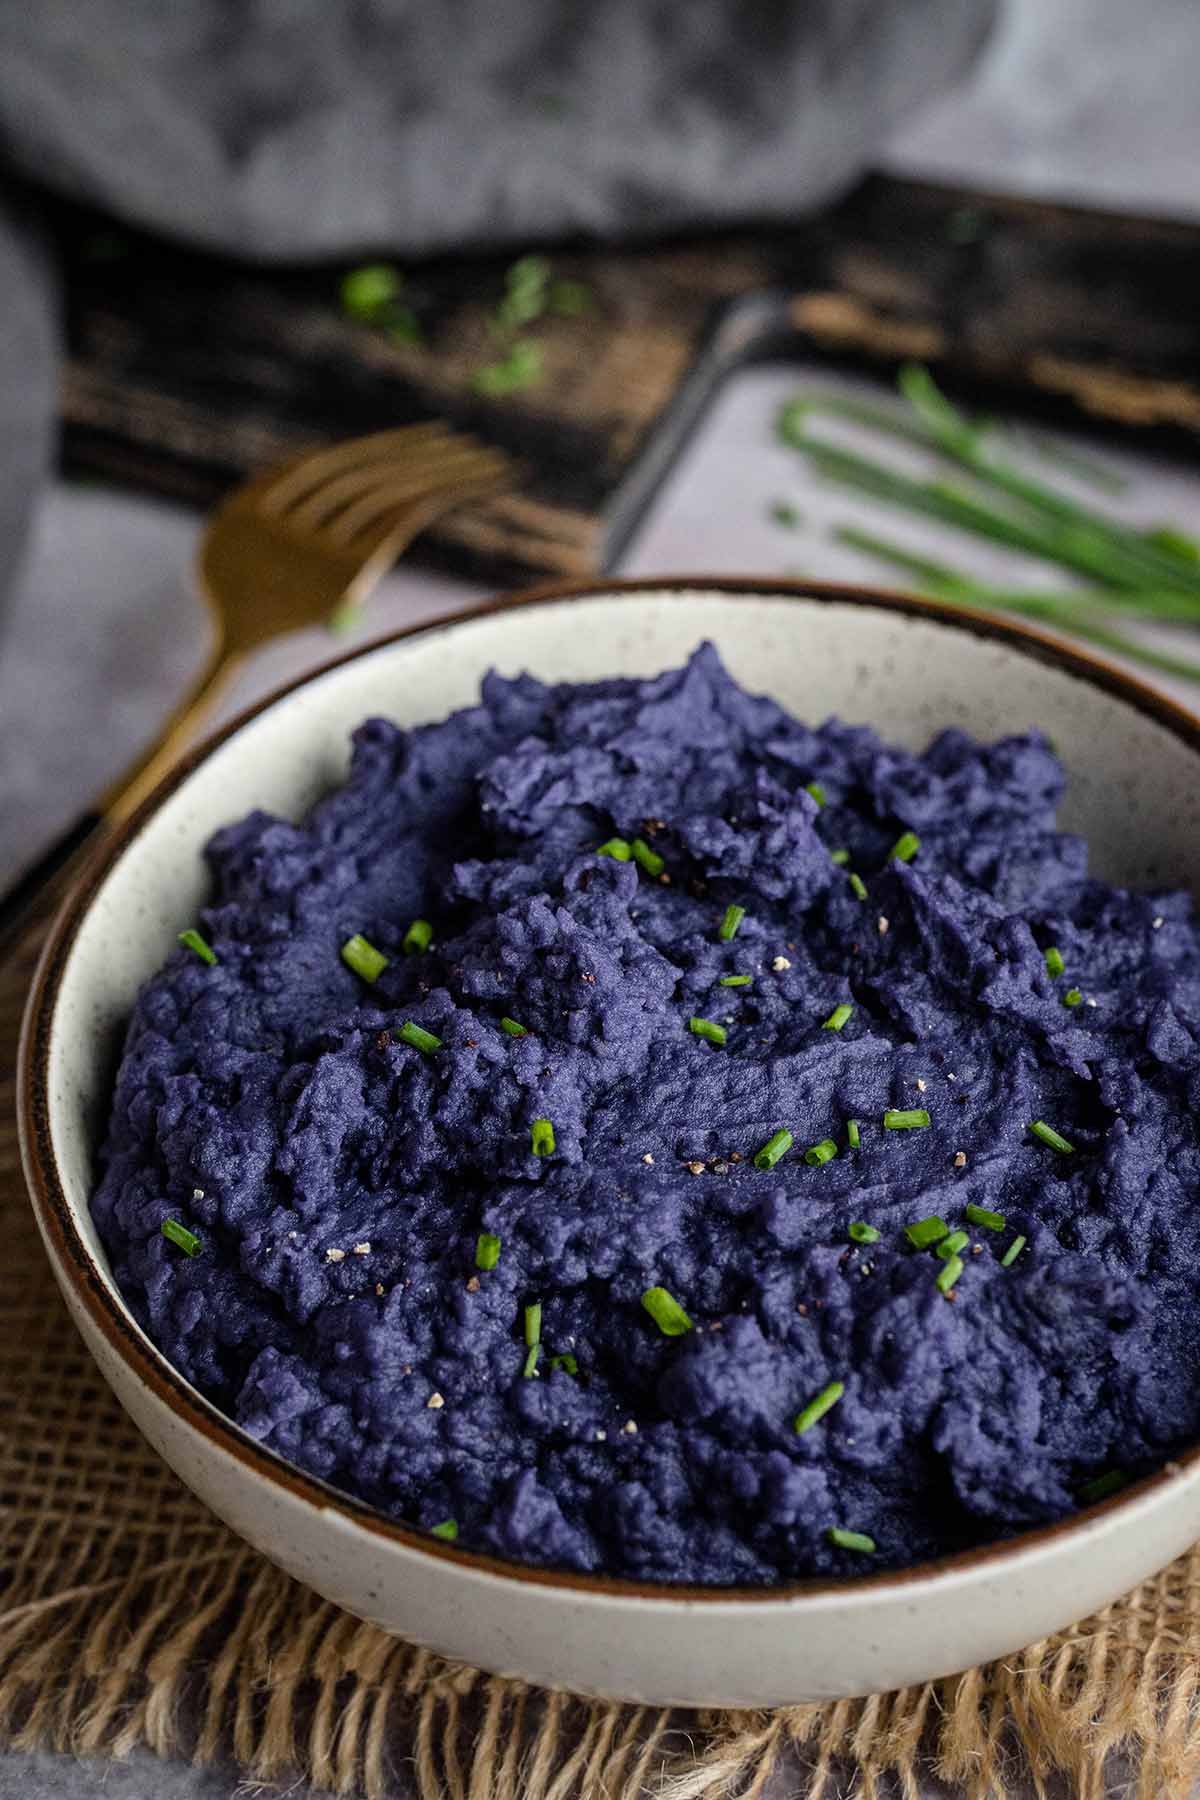 Mashed purple potatoes